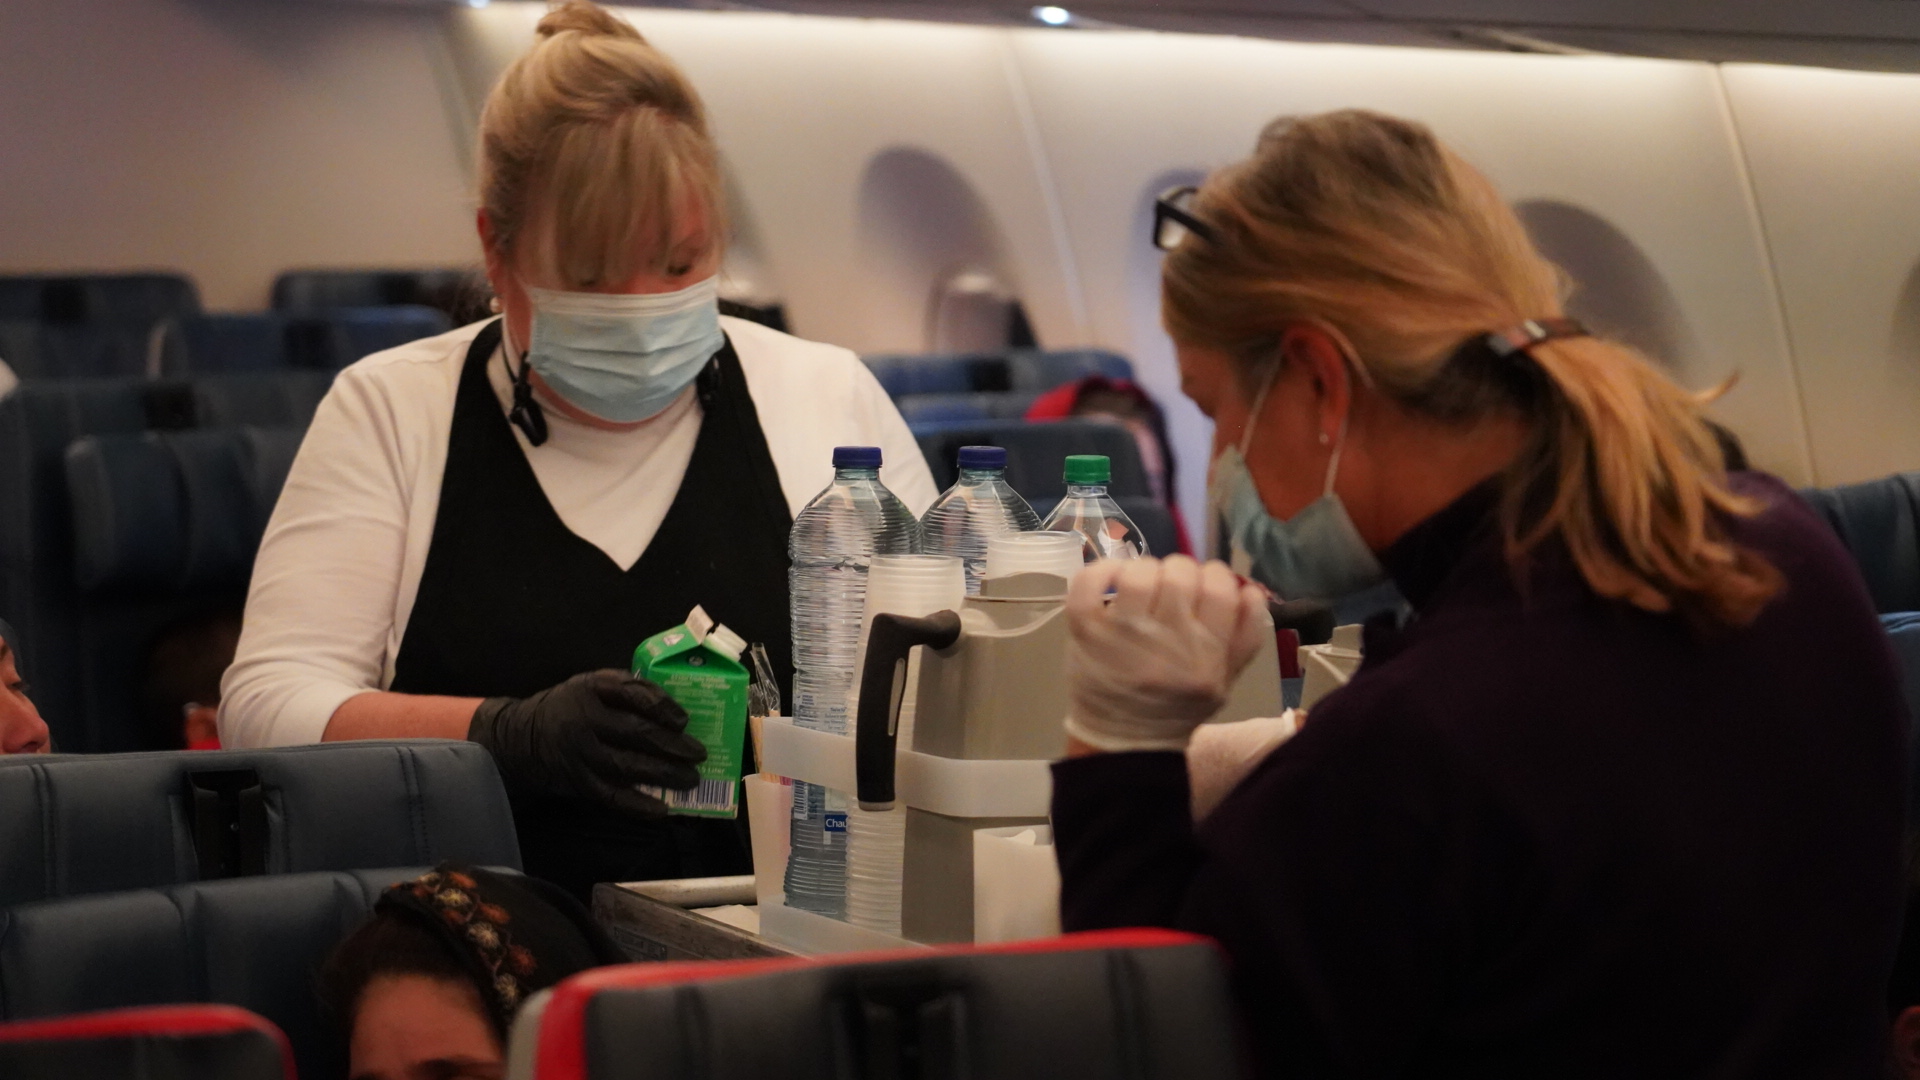 Delta Air Lines Flight Attendant serves passengers during CRAF mission.